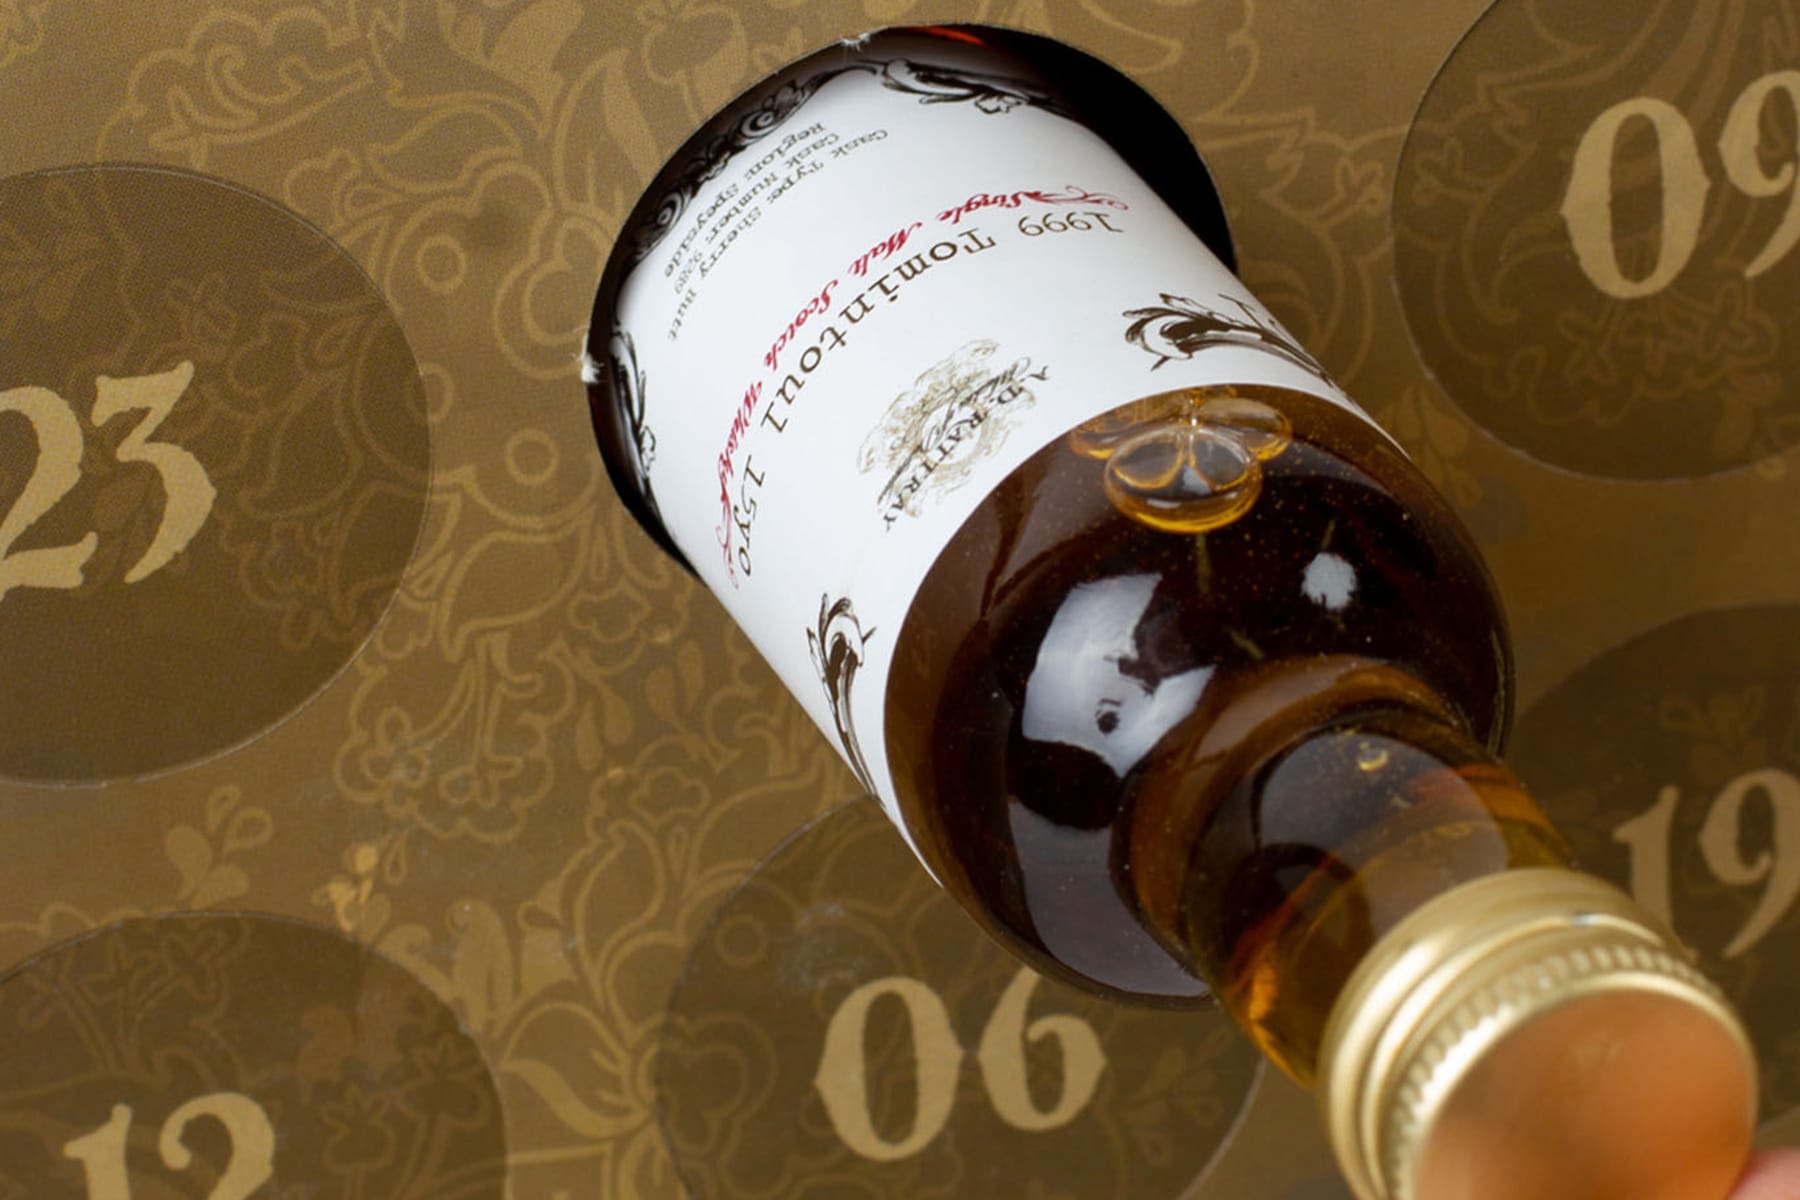 SPOILER ALERT: 2nd Edition Premium Scotch Whisky Advent Calendar